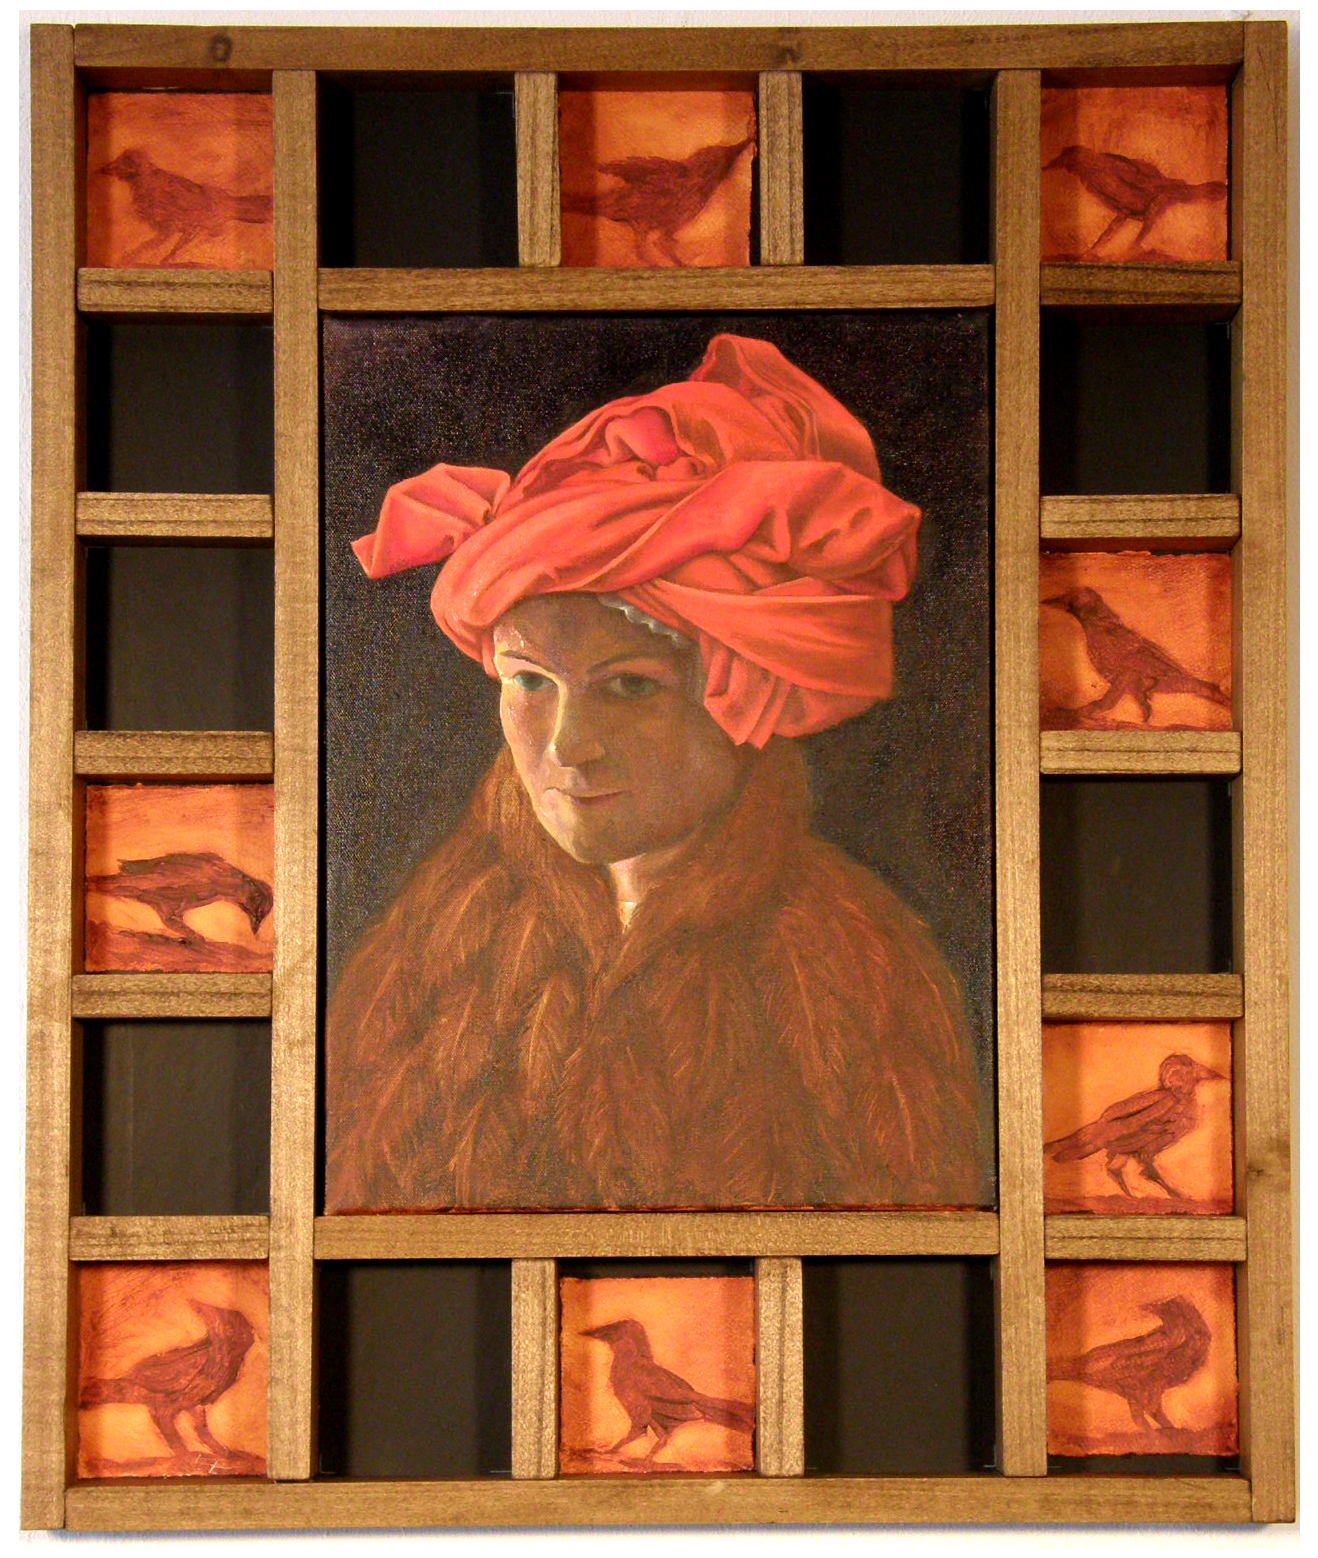 Self-Portrait in a Red Turban